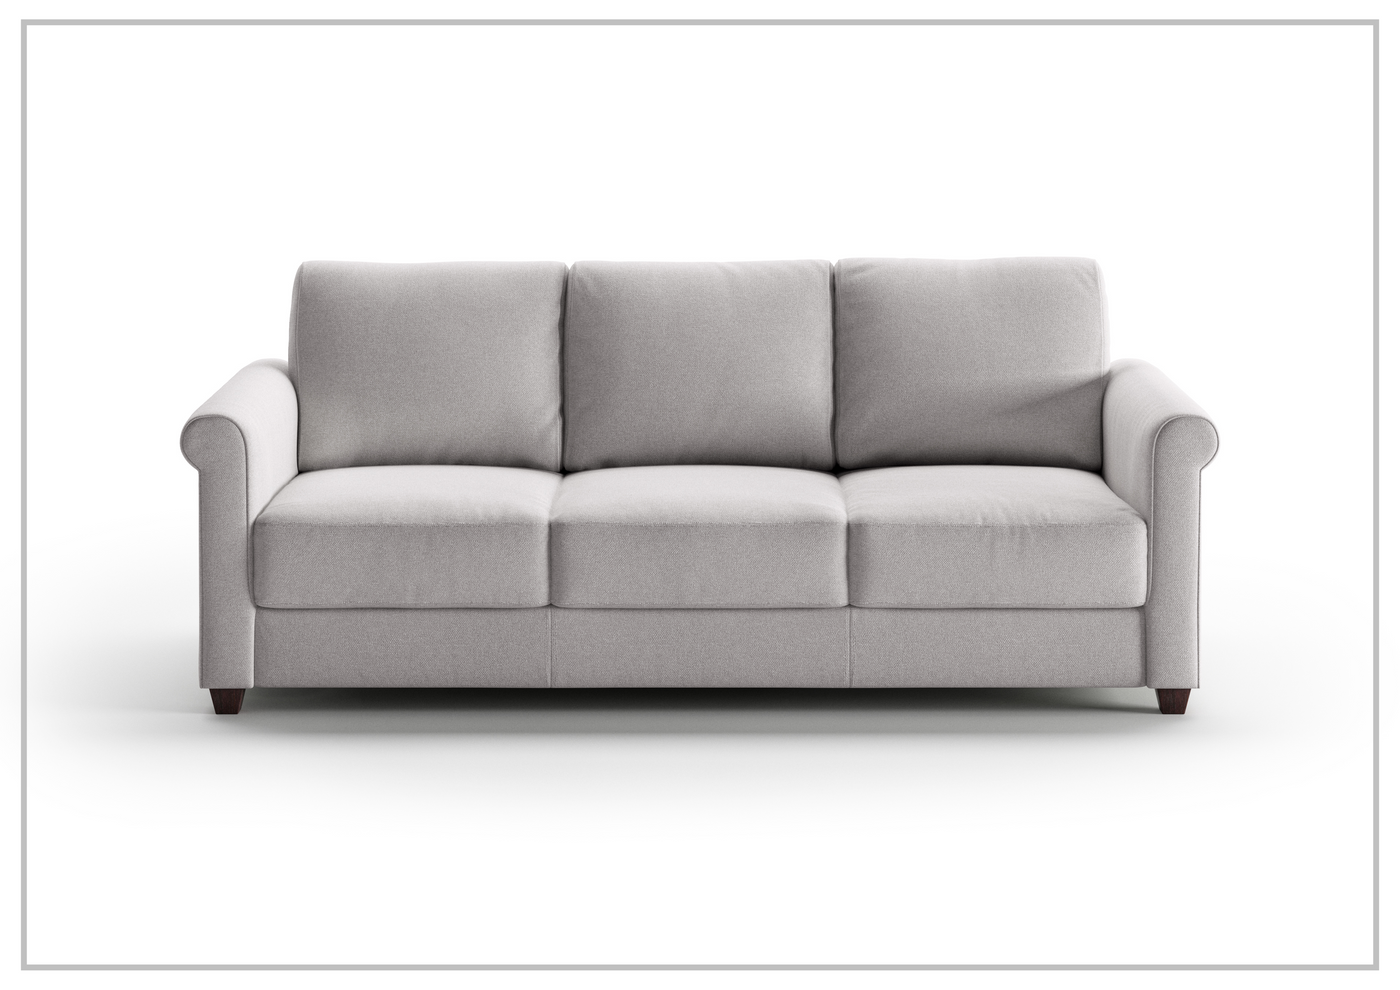 Luonto Rosalind Fabric Sofa Sleeper with Under-Seat Storage